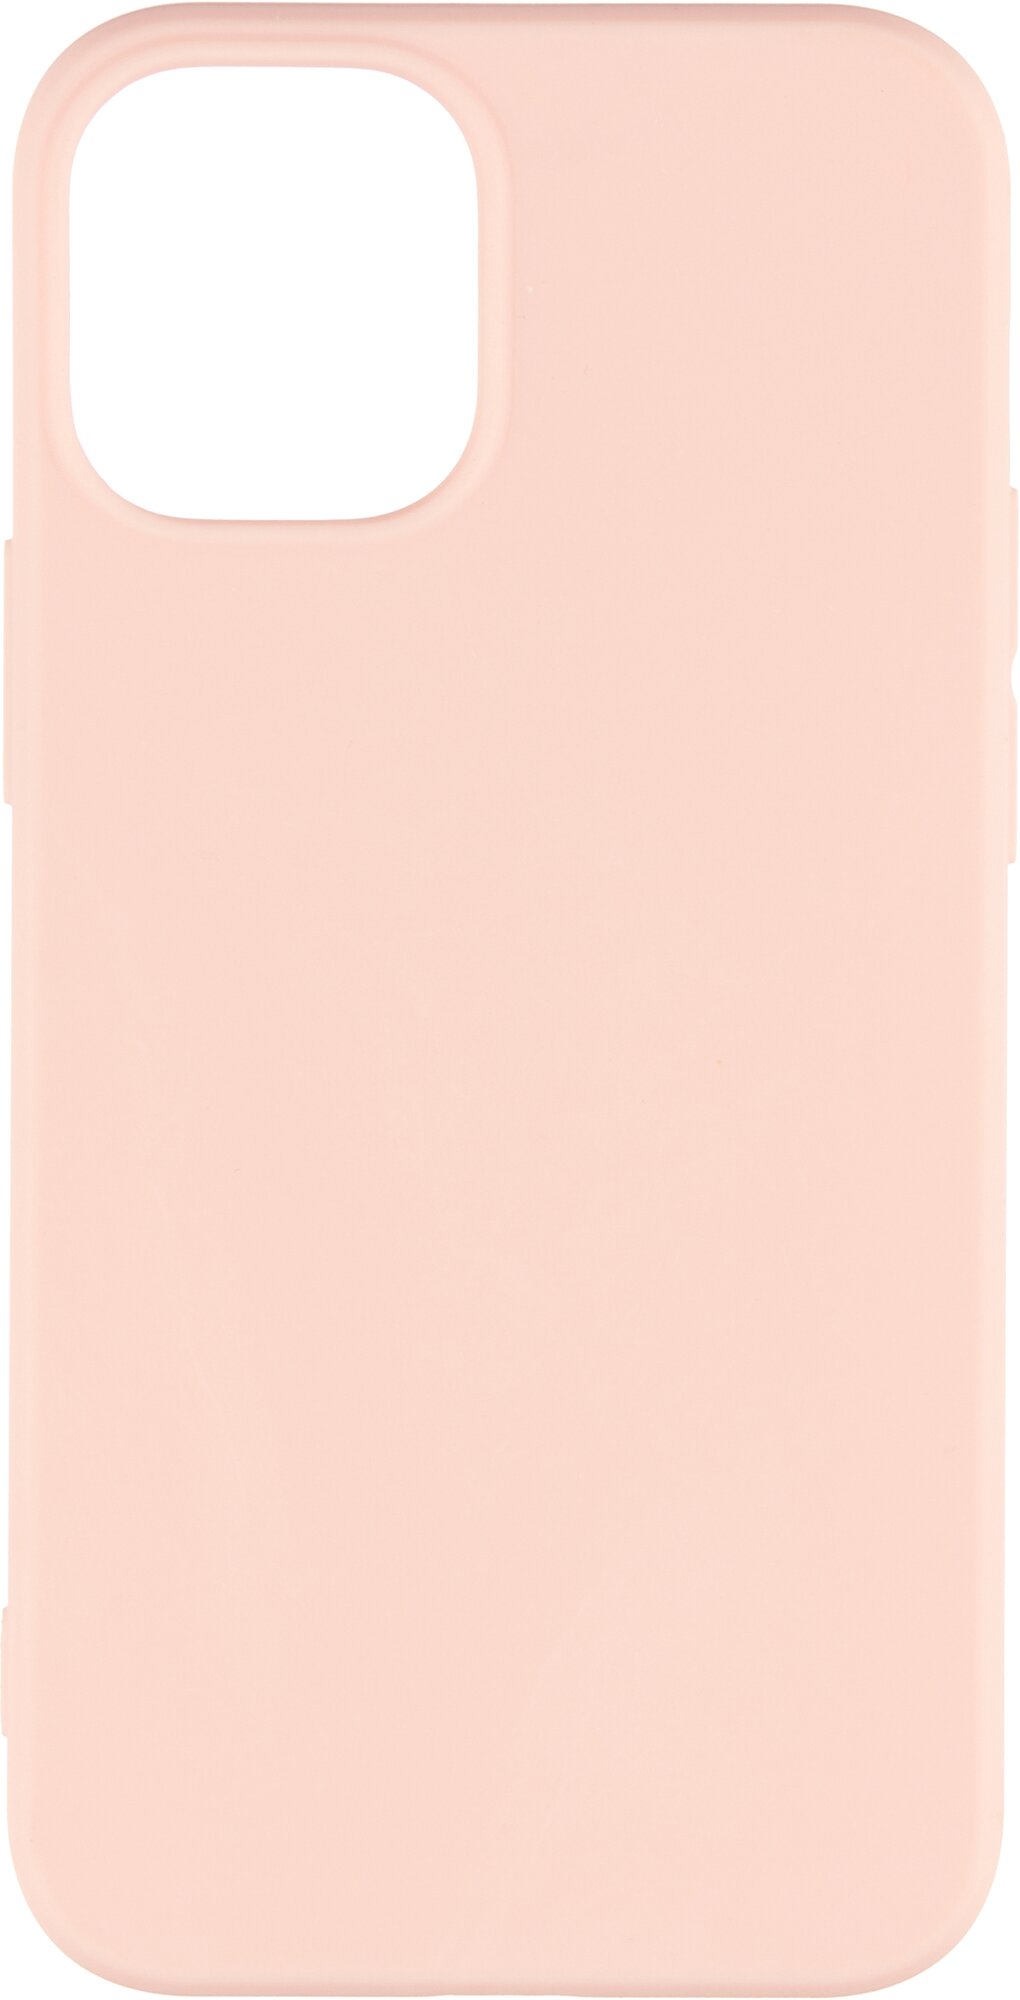 Чехол Gel Color для Apple iPhone 12 mini, розовый, PET синий, Deppa